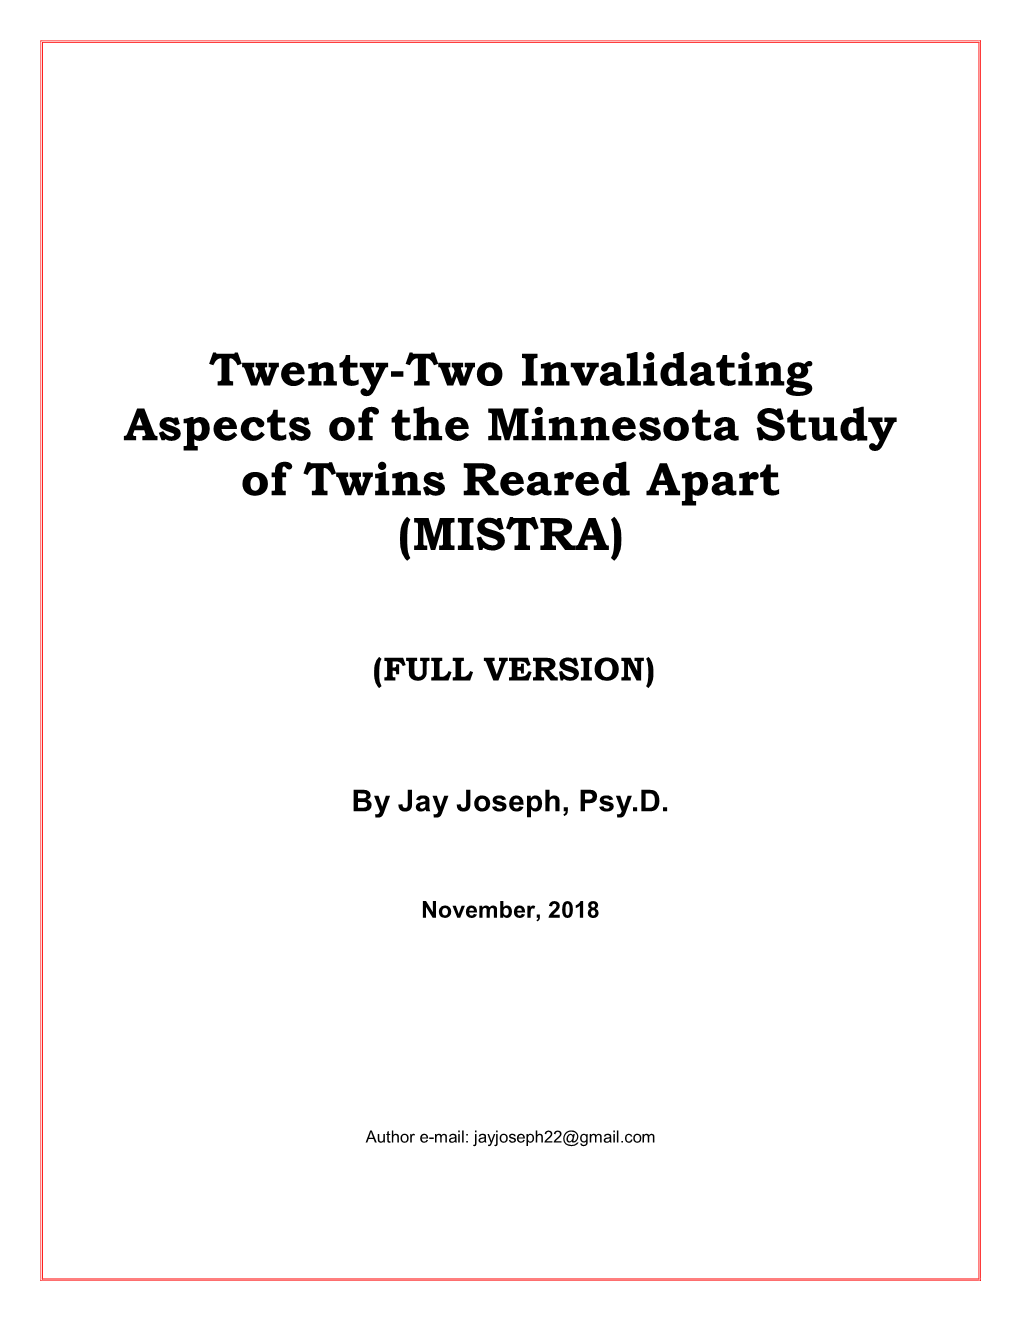 Twenty-Two Invalidating Aspects of the Minnesota Study of Twins Reared Apart (MISTRA)